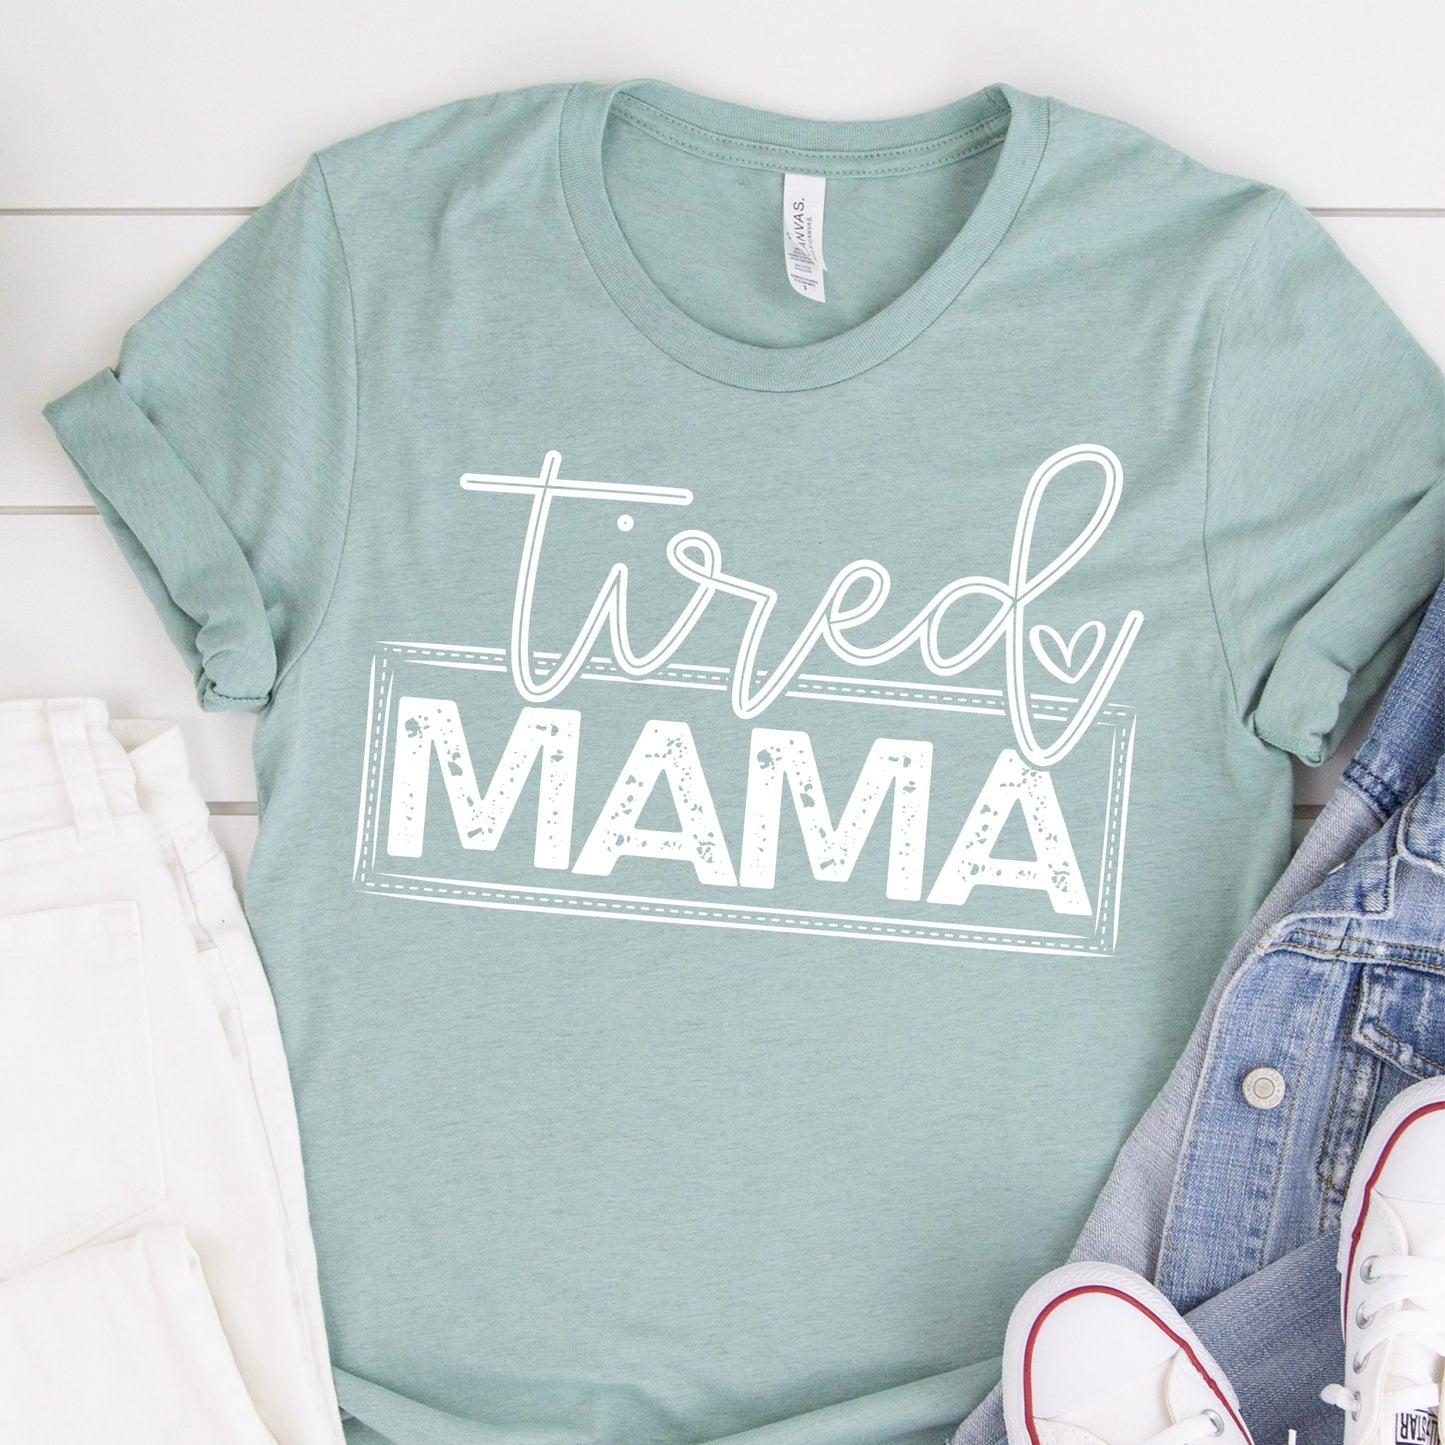 Tired mama